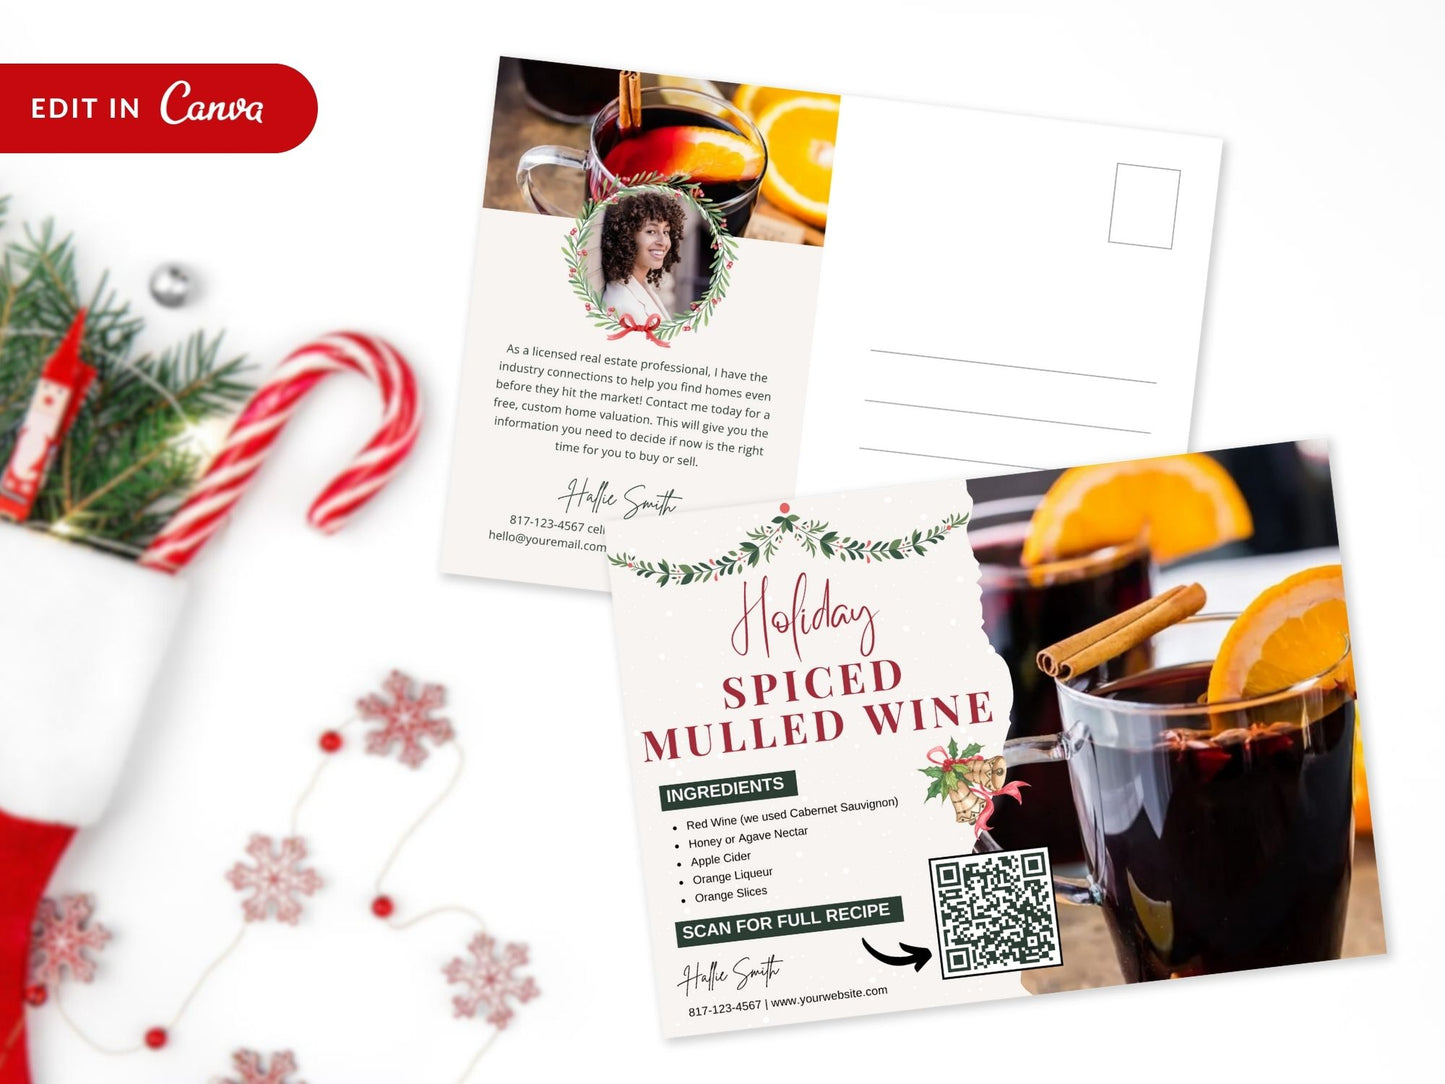 Real Estate Christmas Recipe Postcard Bundle - Festive Holiday Recipes